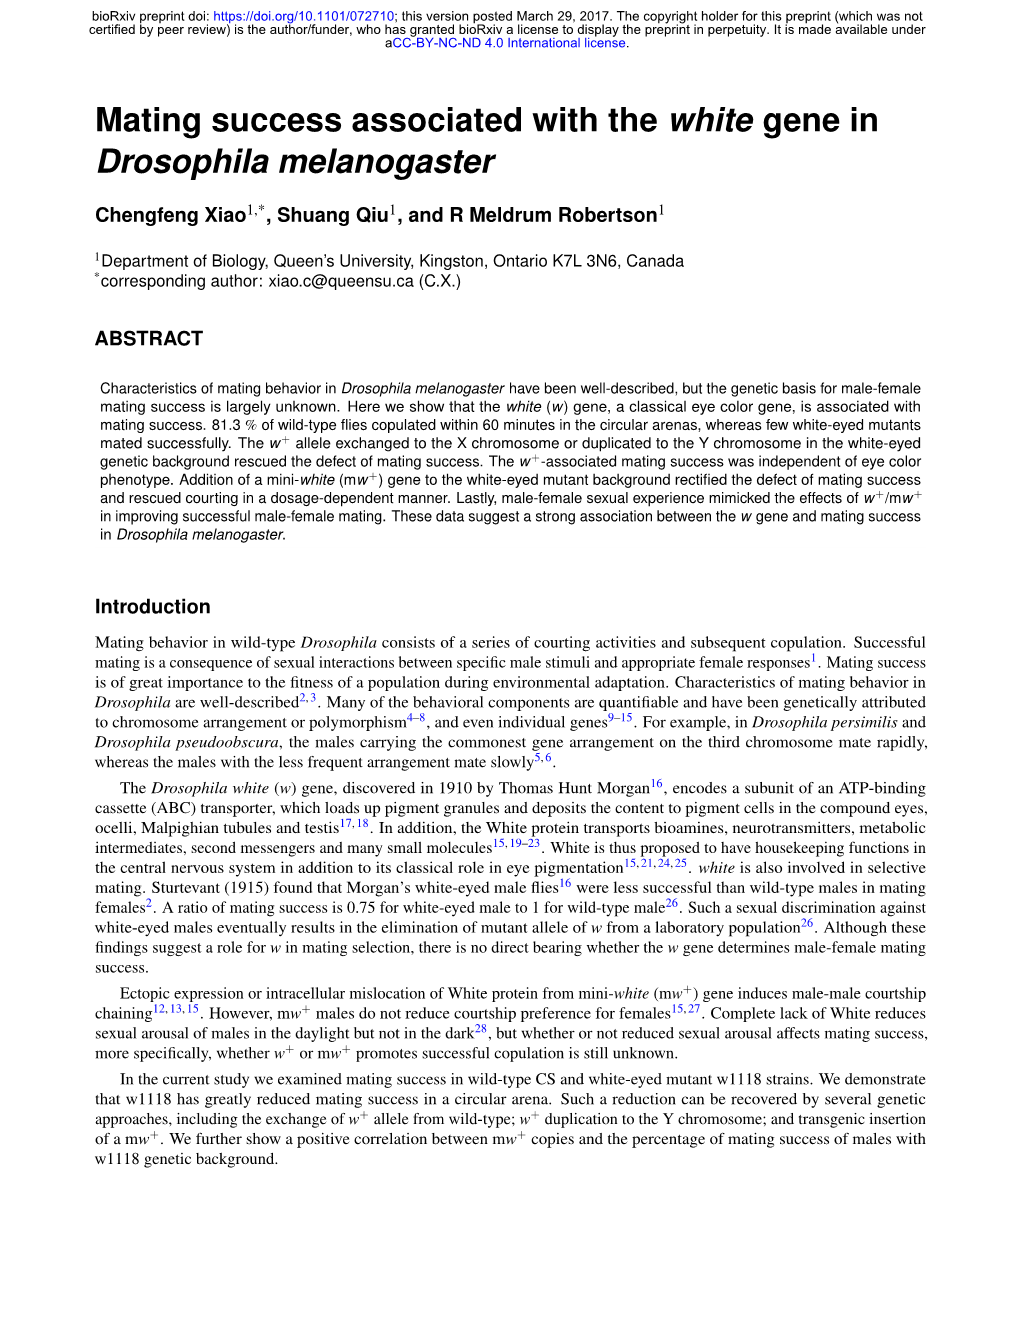 Mating Success Associated with the White Gene in Drosophila Melanogaster